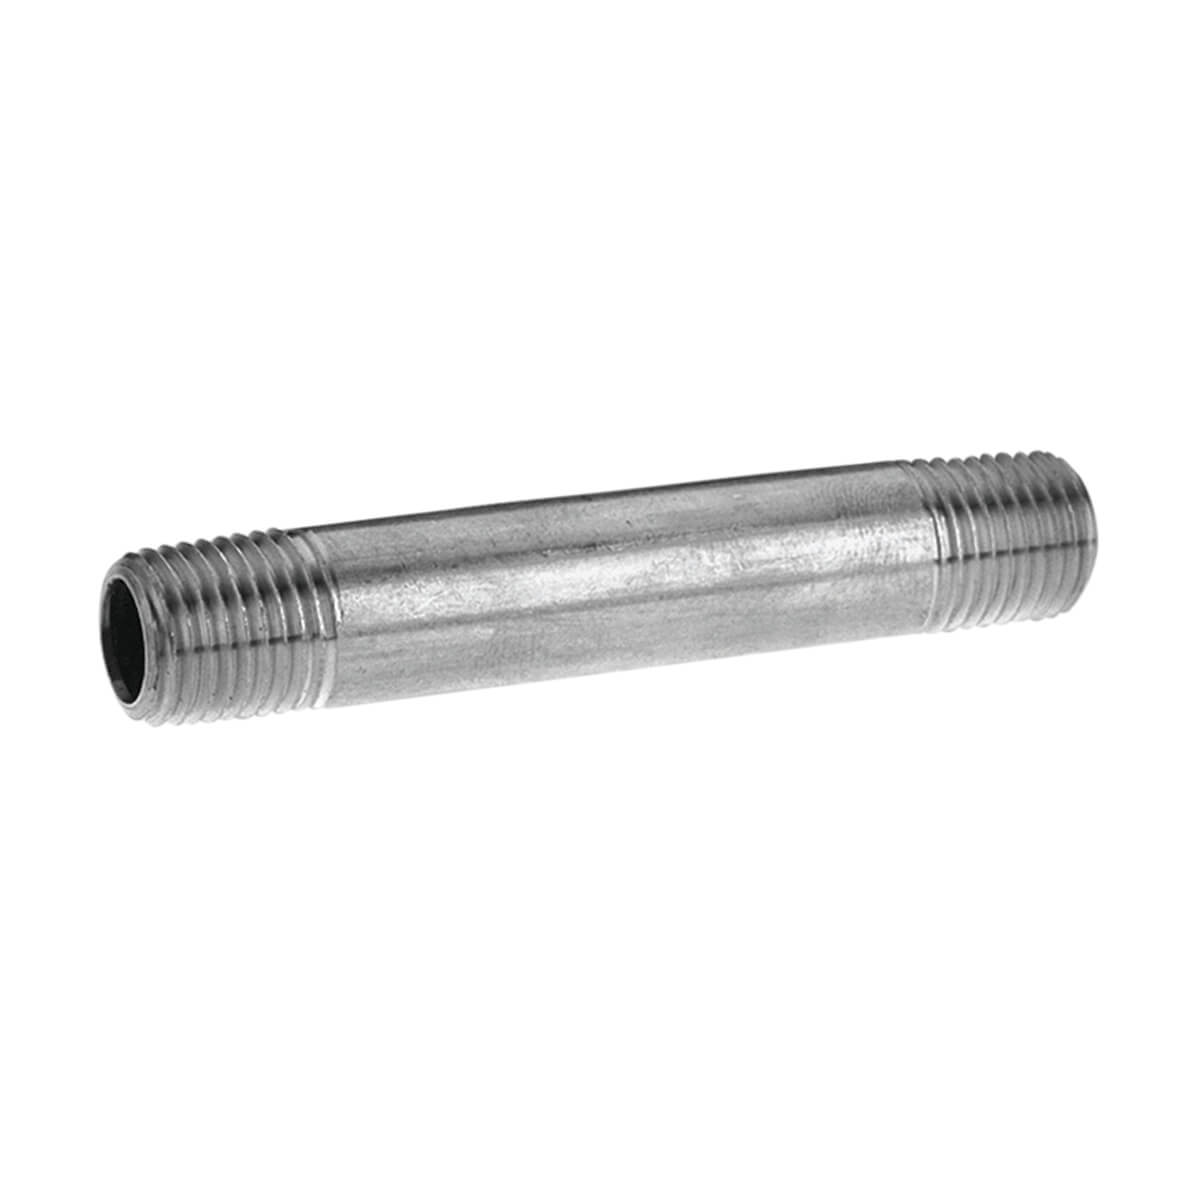 Pipe Nipple Galvanized Steel - 1/2-in x 6-in